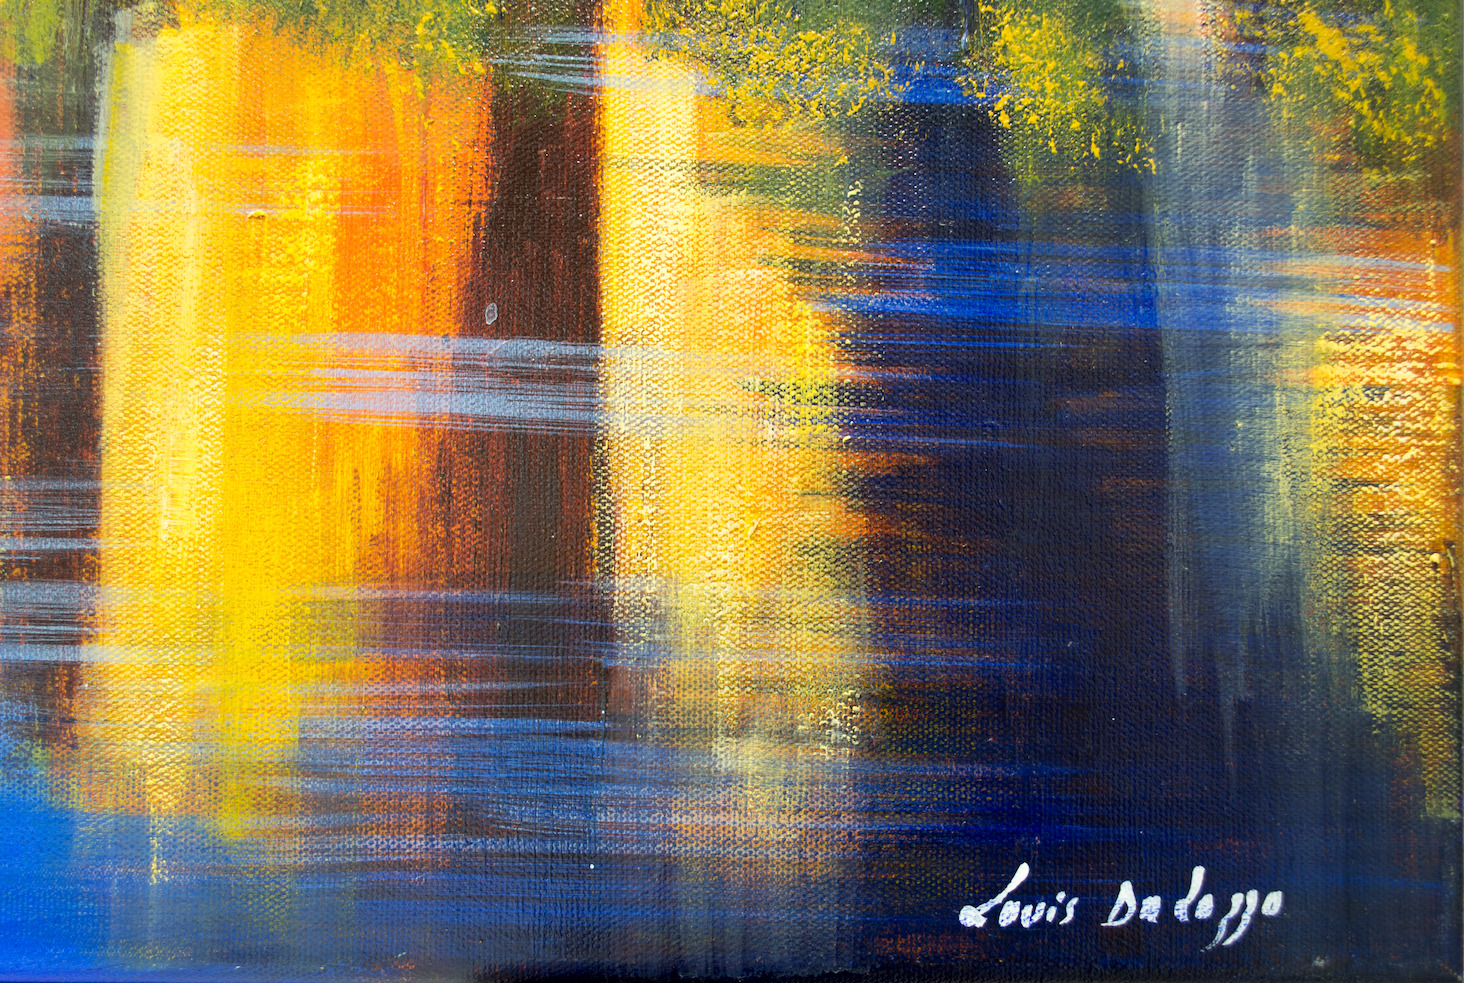 Close Up Signature Of Acrylic Painting "Morning Reflection Lake Argyle Kimberley" By Louis Dalozzo